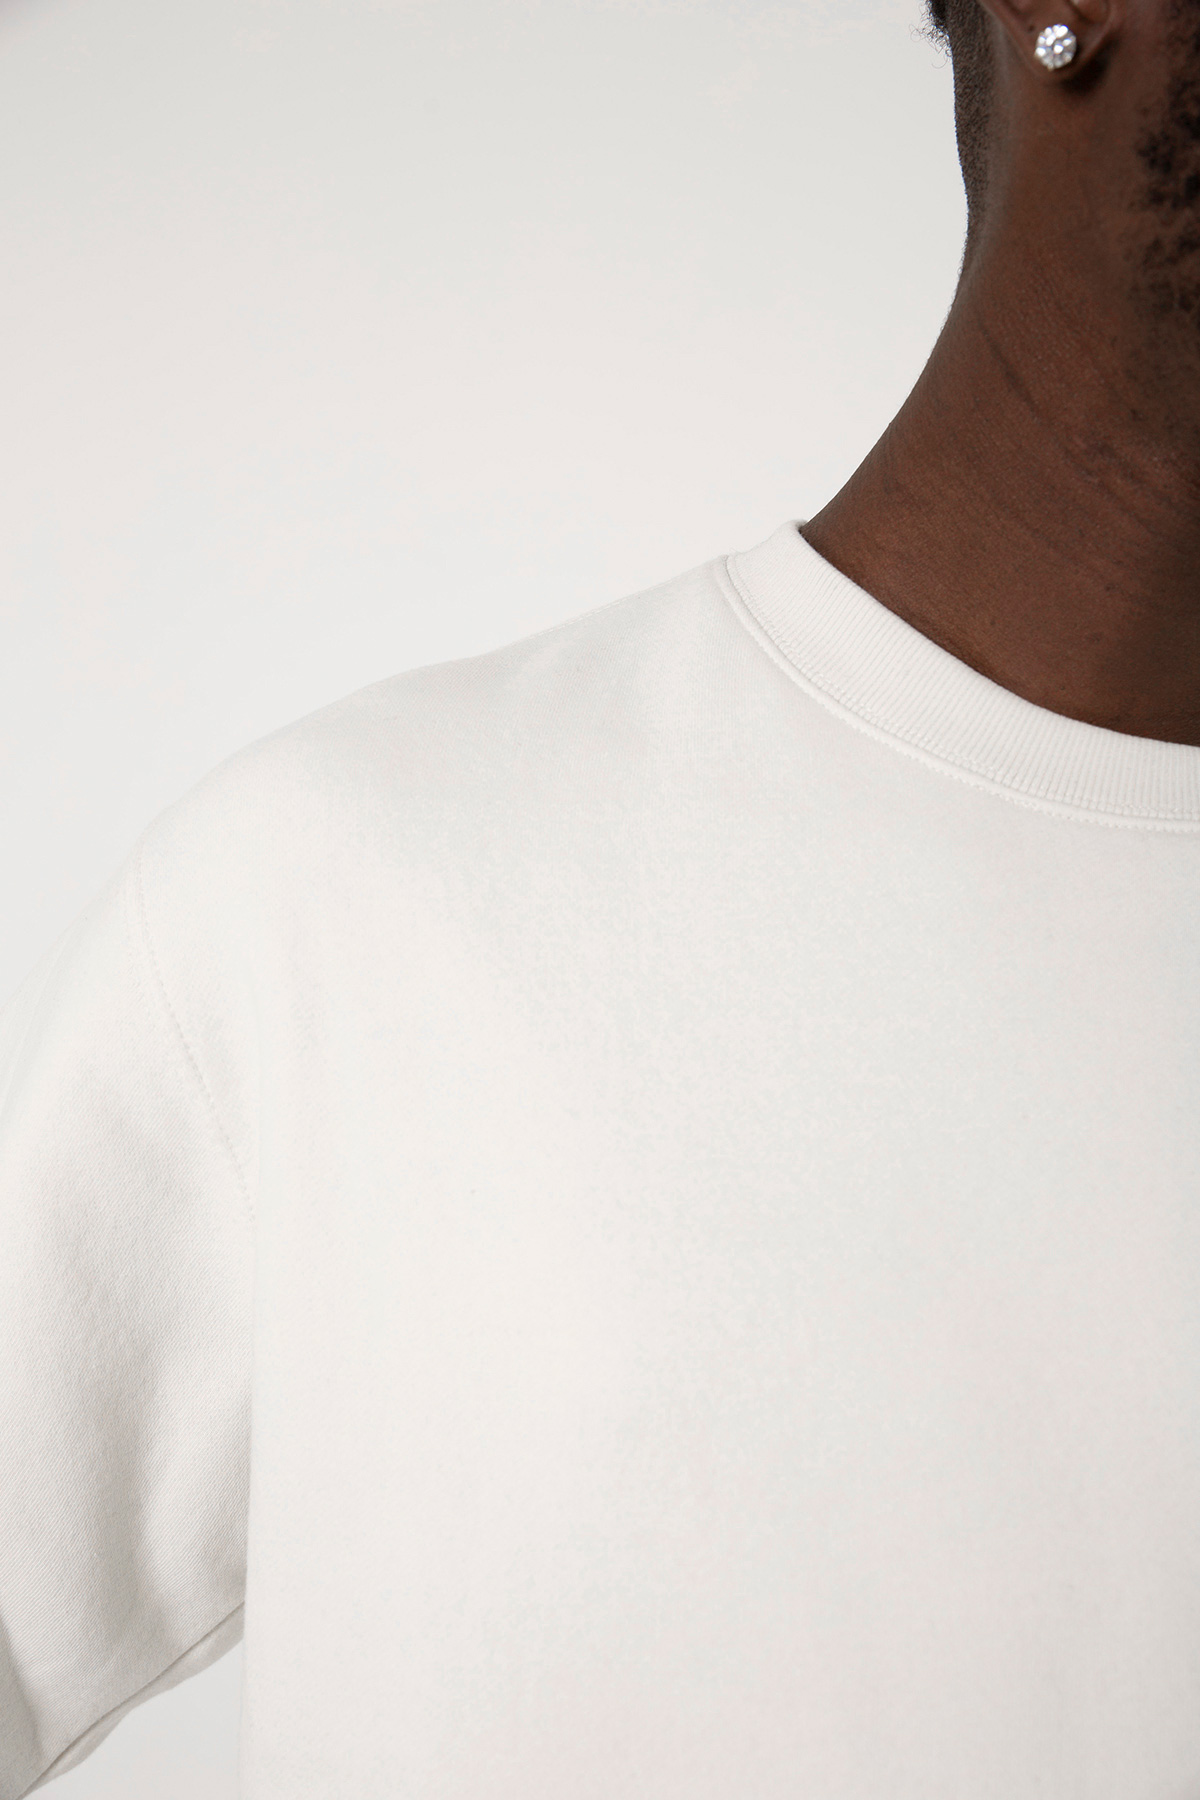 Hocus Pocus University Beyaz Erkek 2ip Sweatshirt